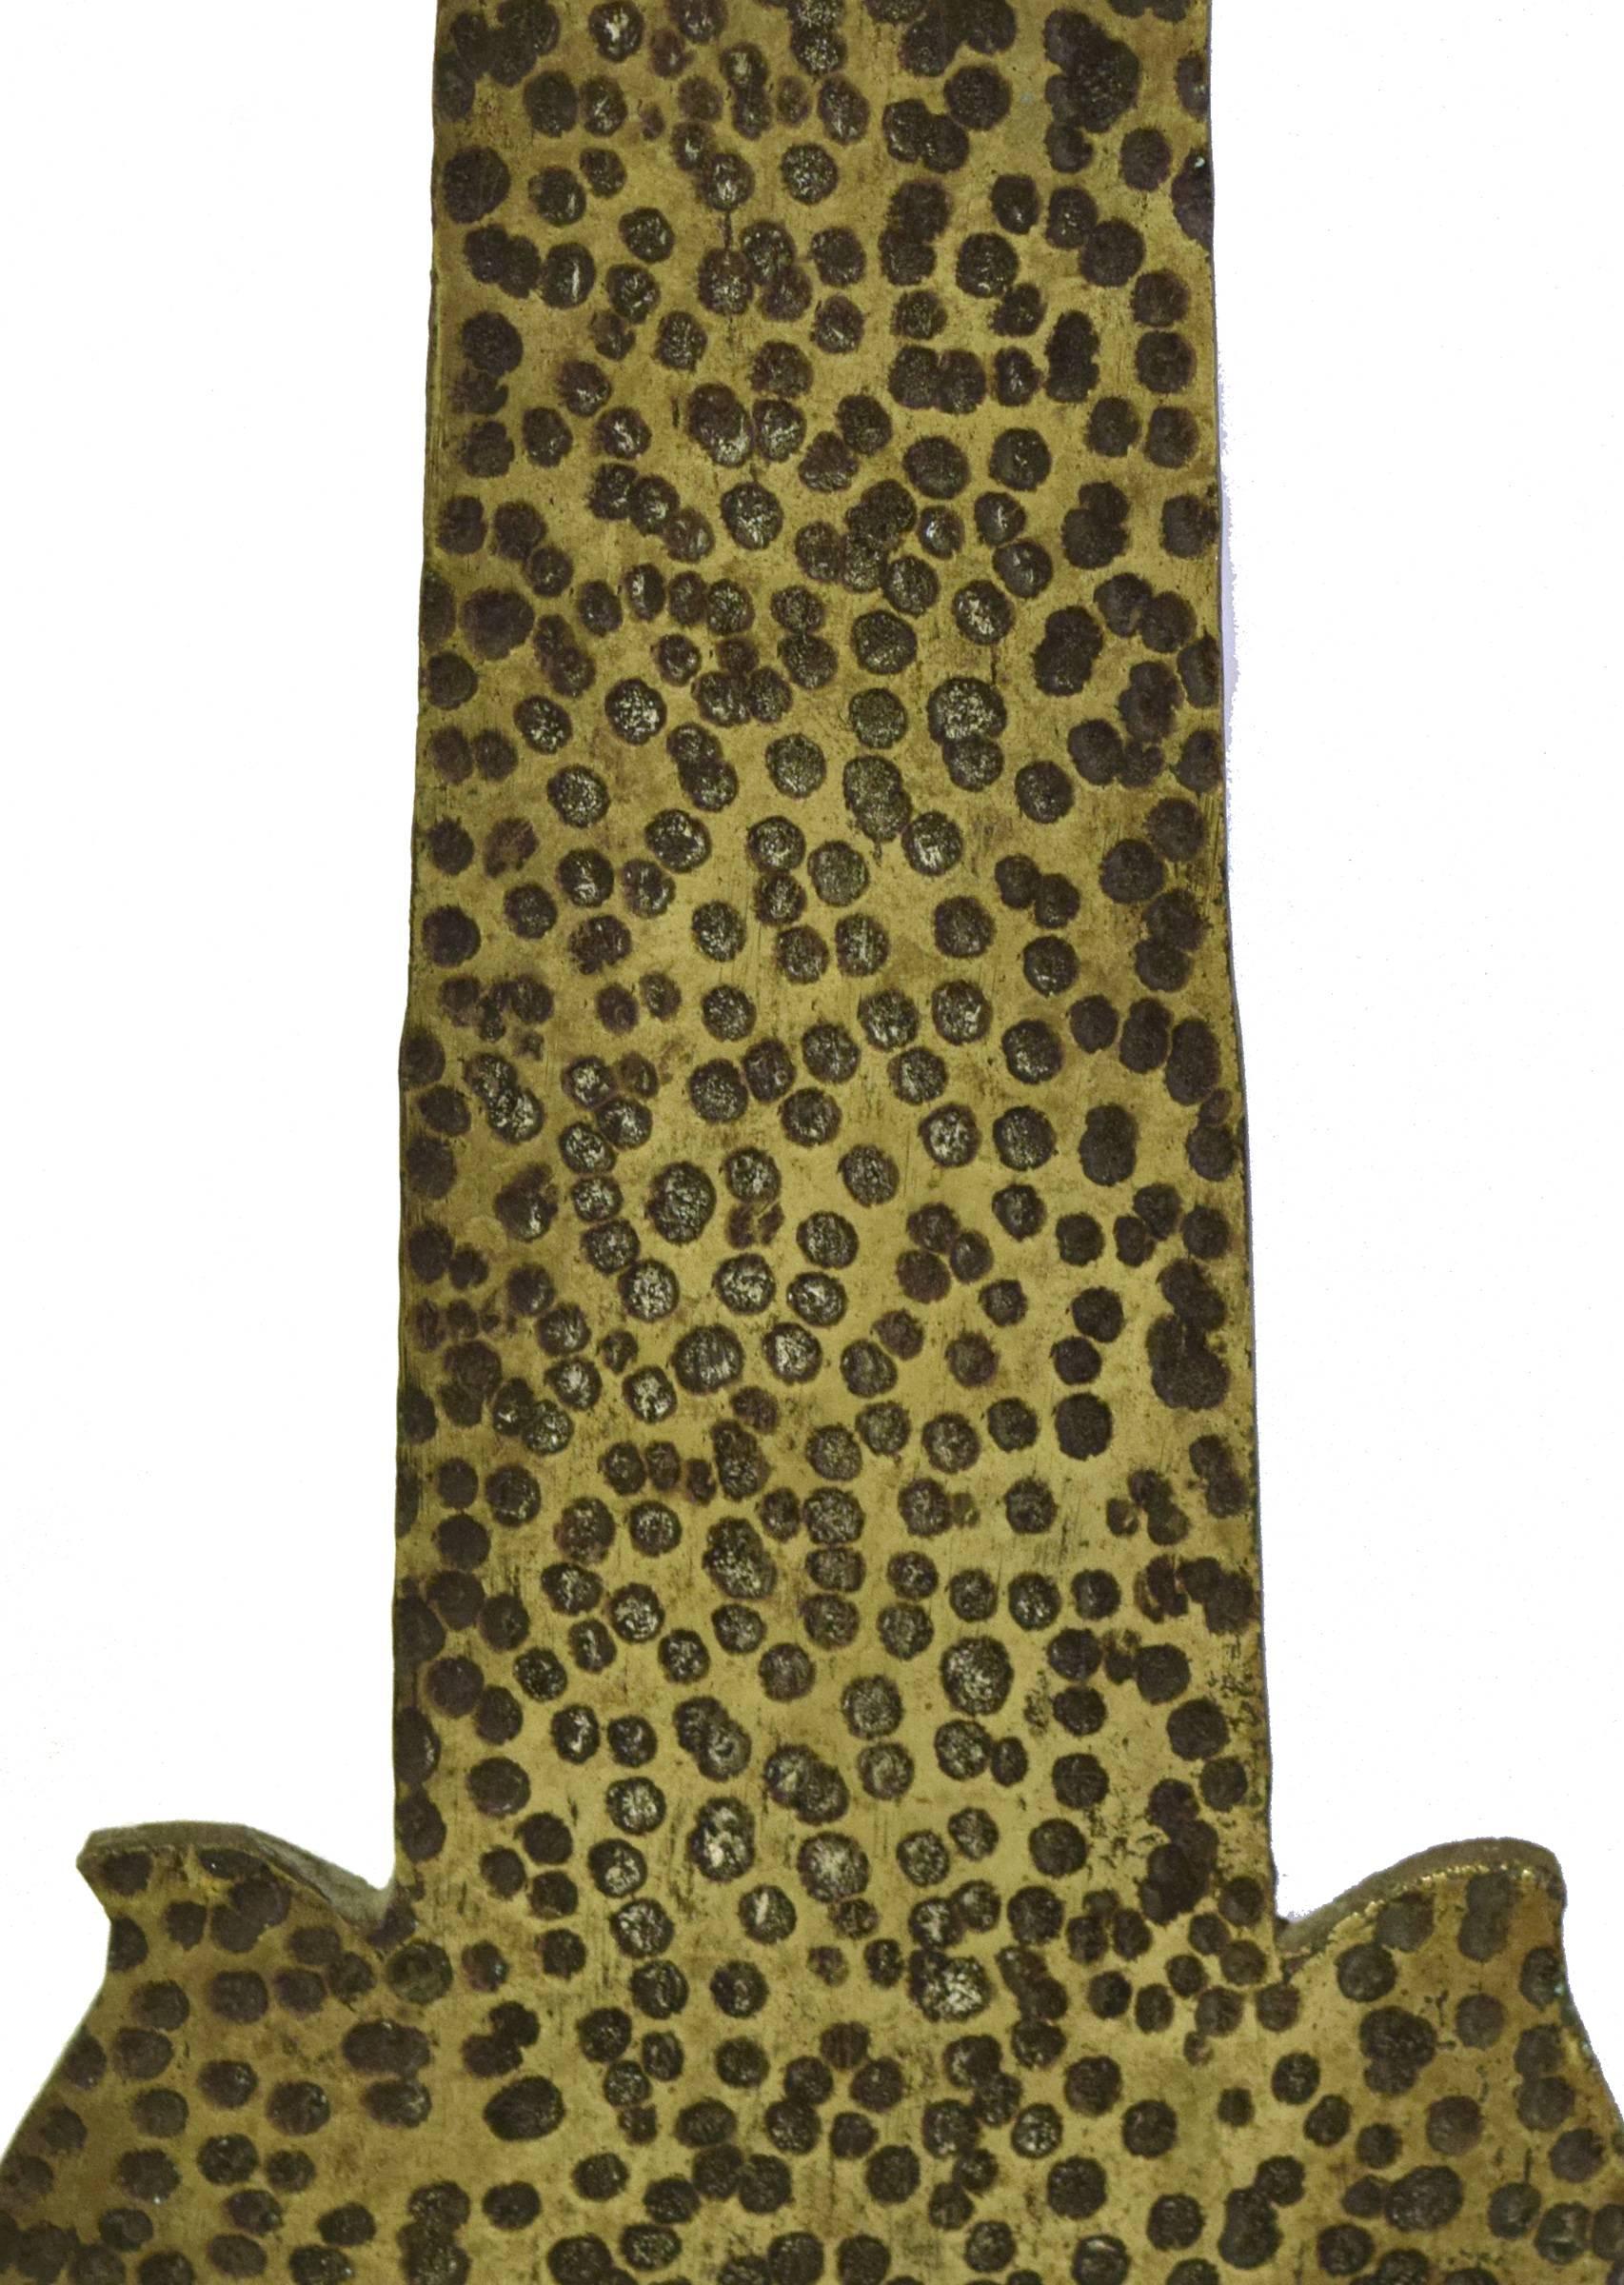 American hammered bronze strap hinge on a custom mount.